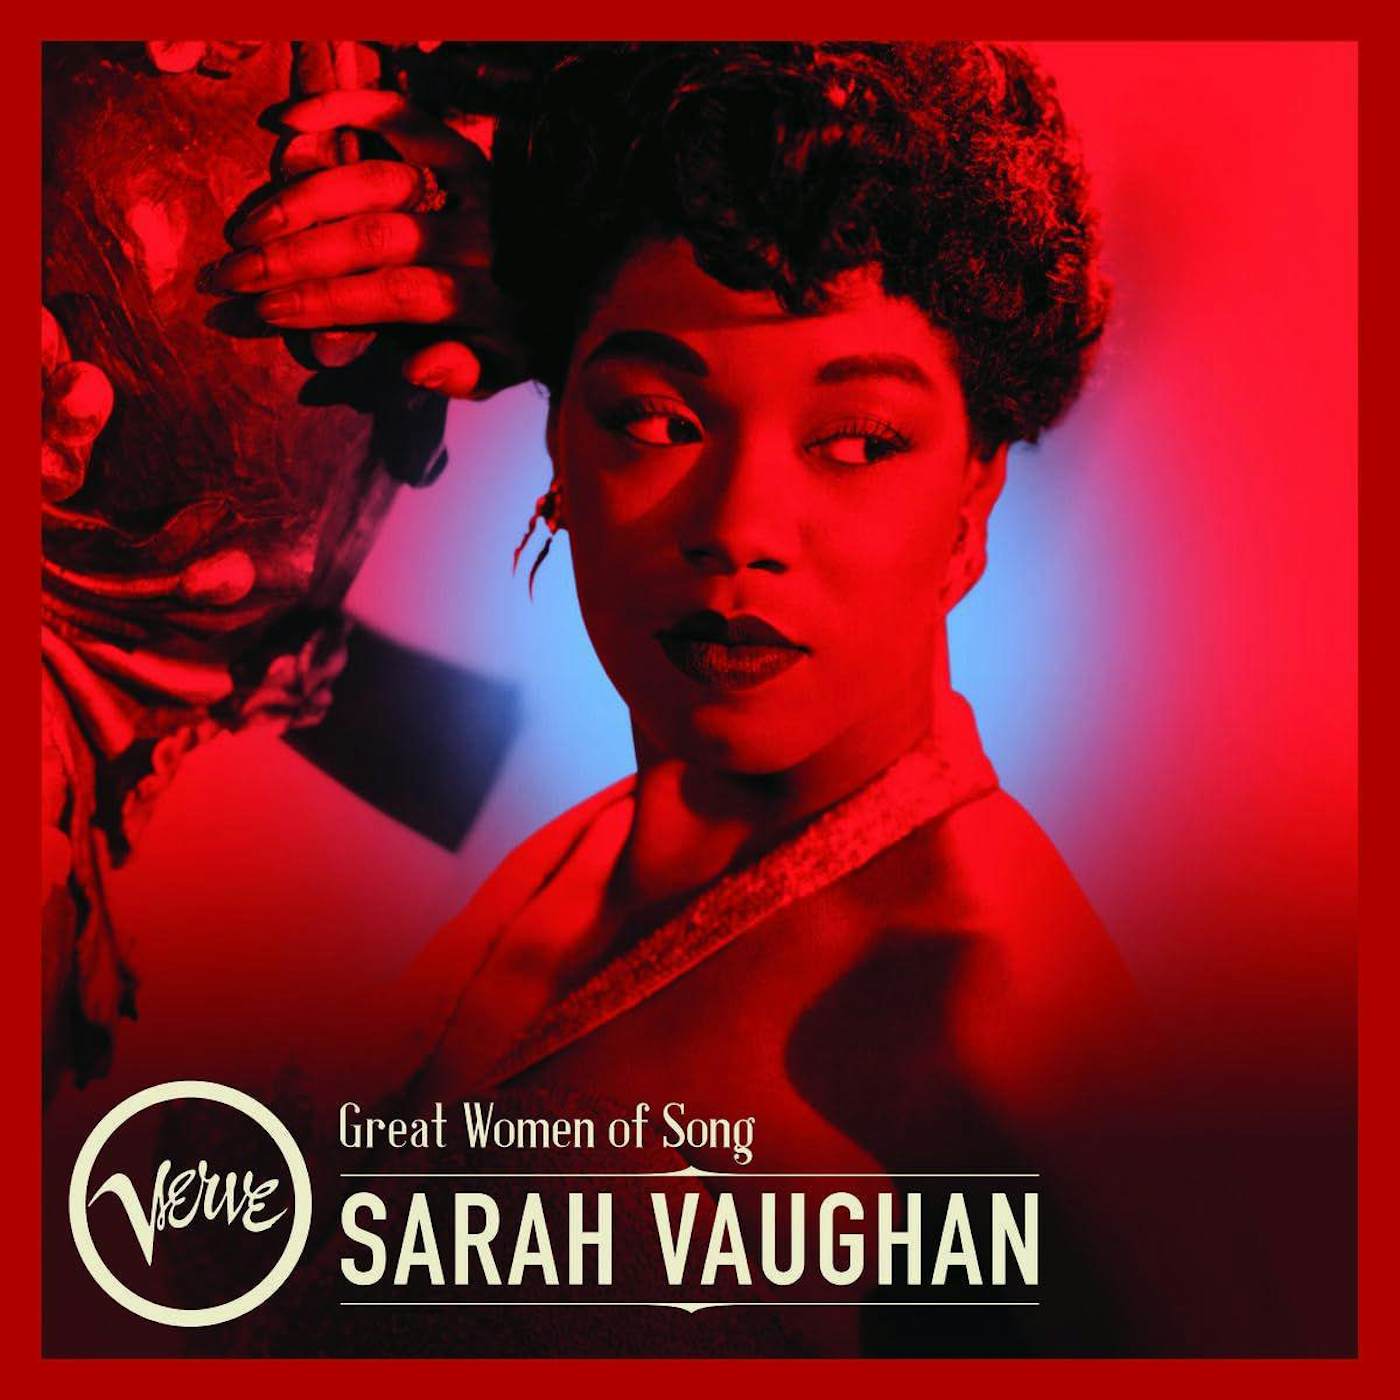 Great Women Of Song: Sarah Vaughan Vinyl Record